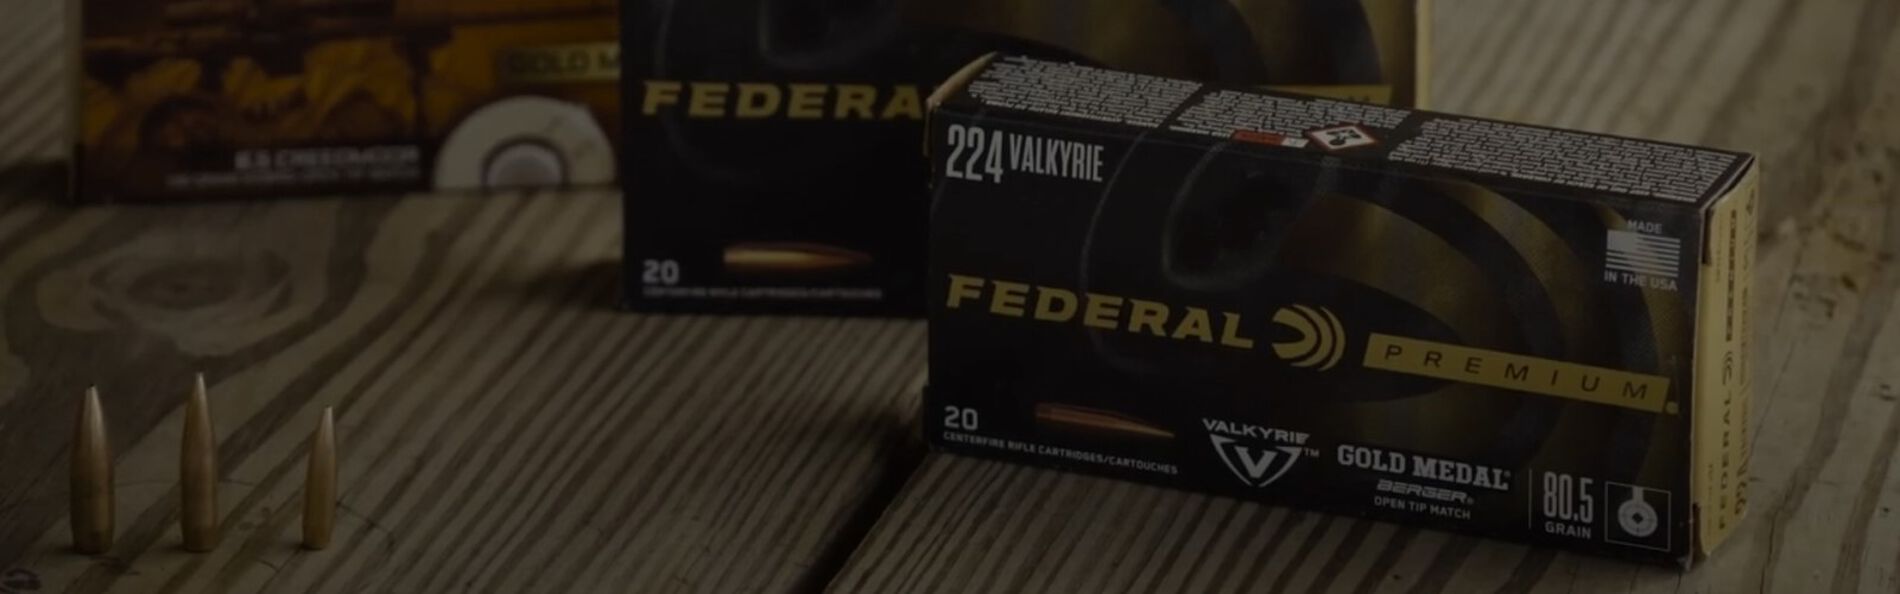 Federal Ammunition sitting on a table